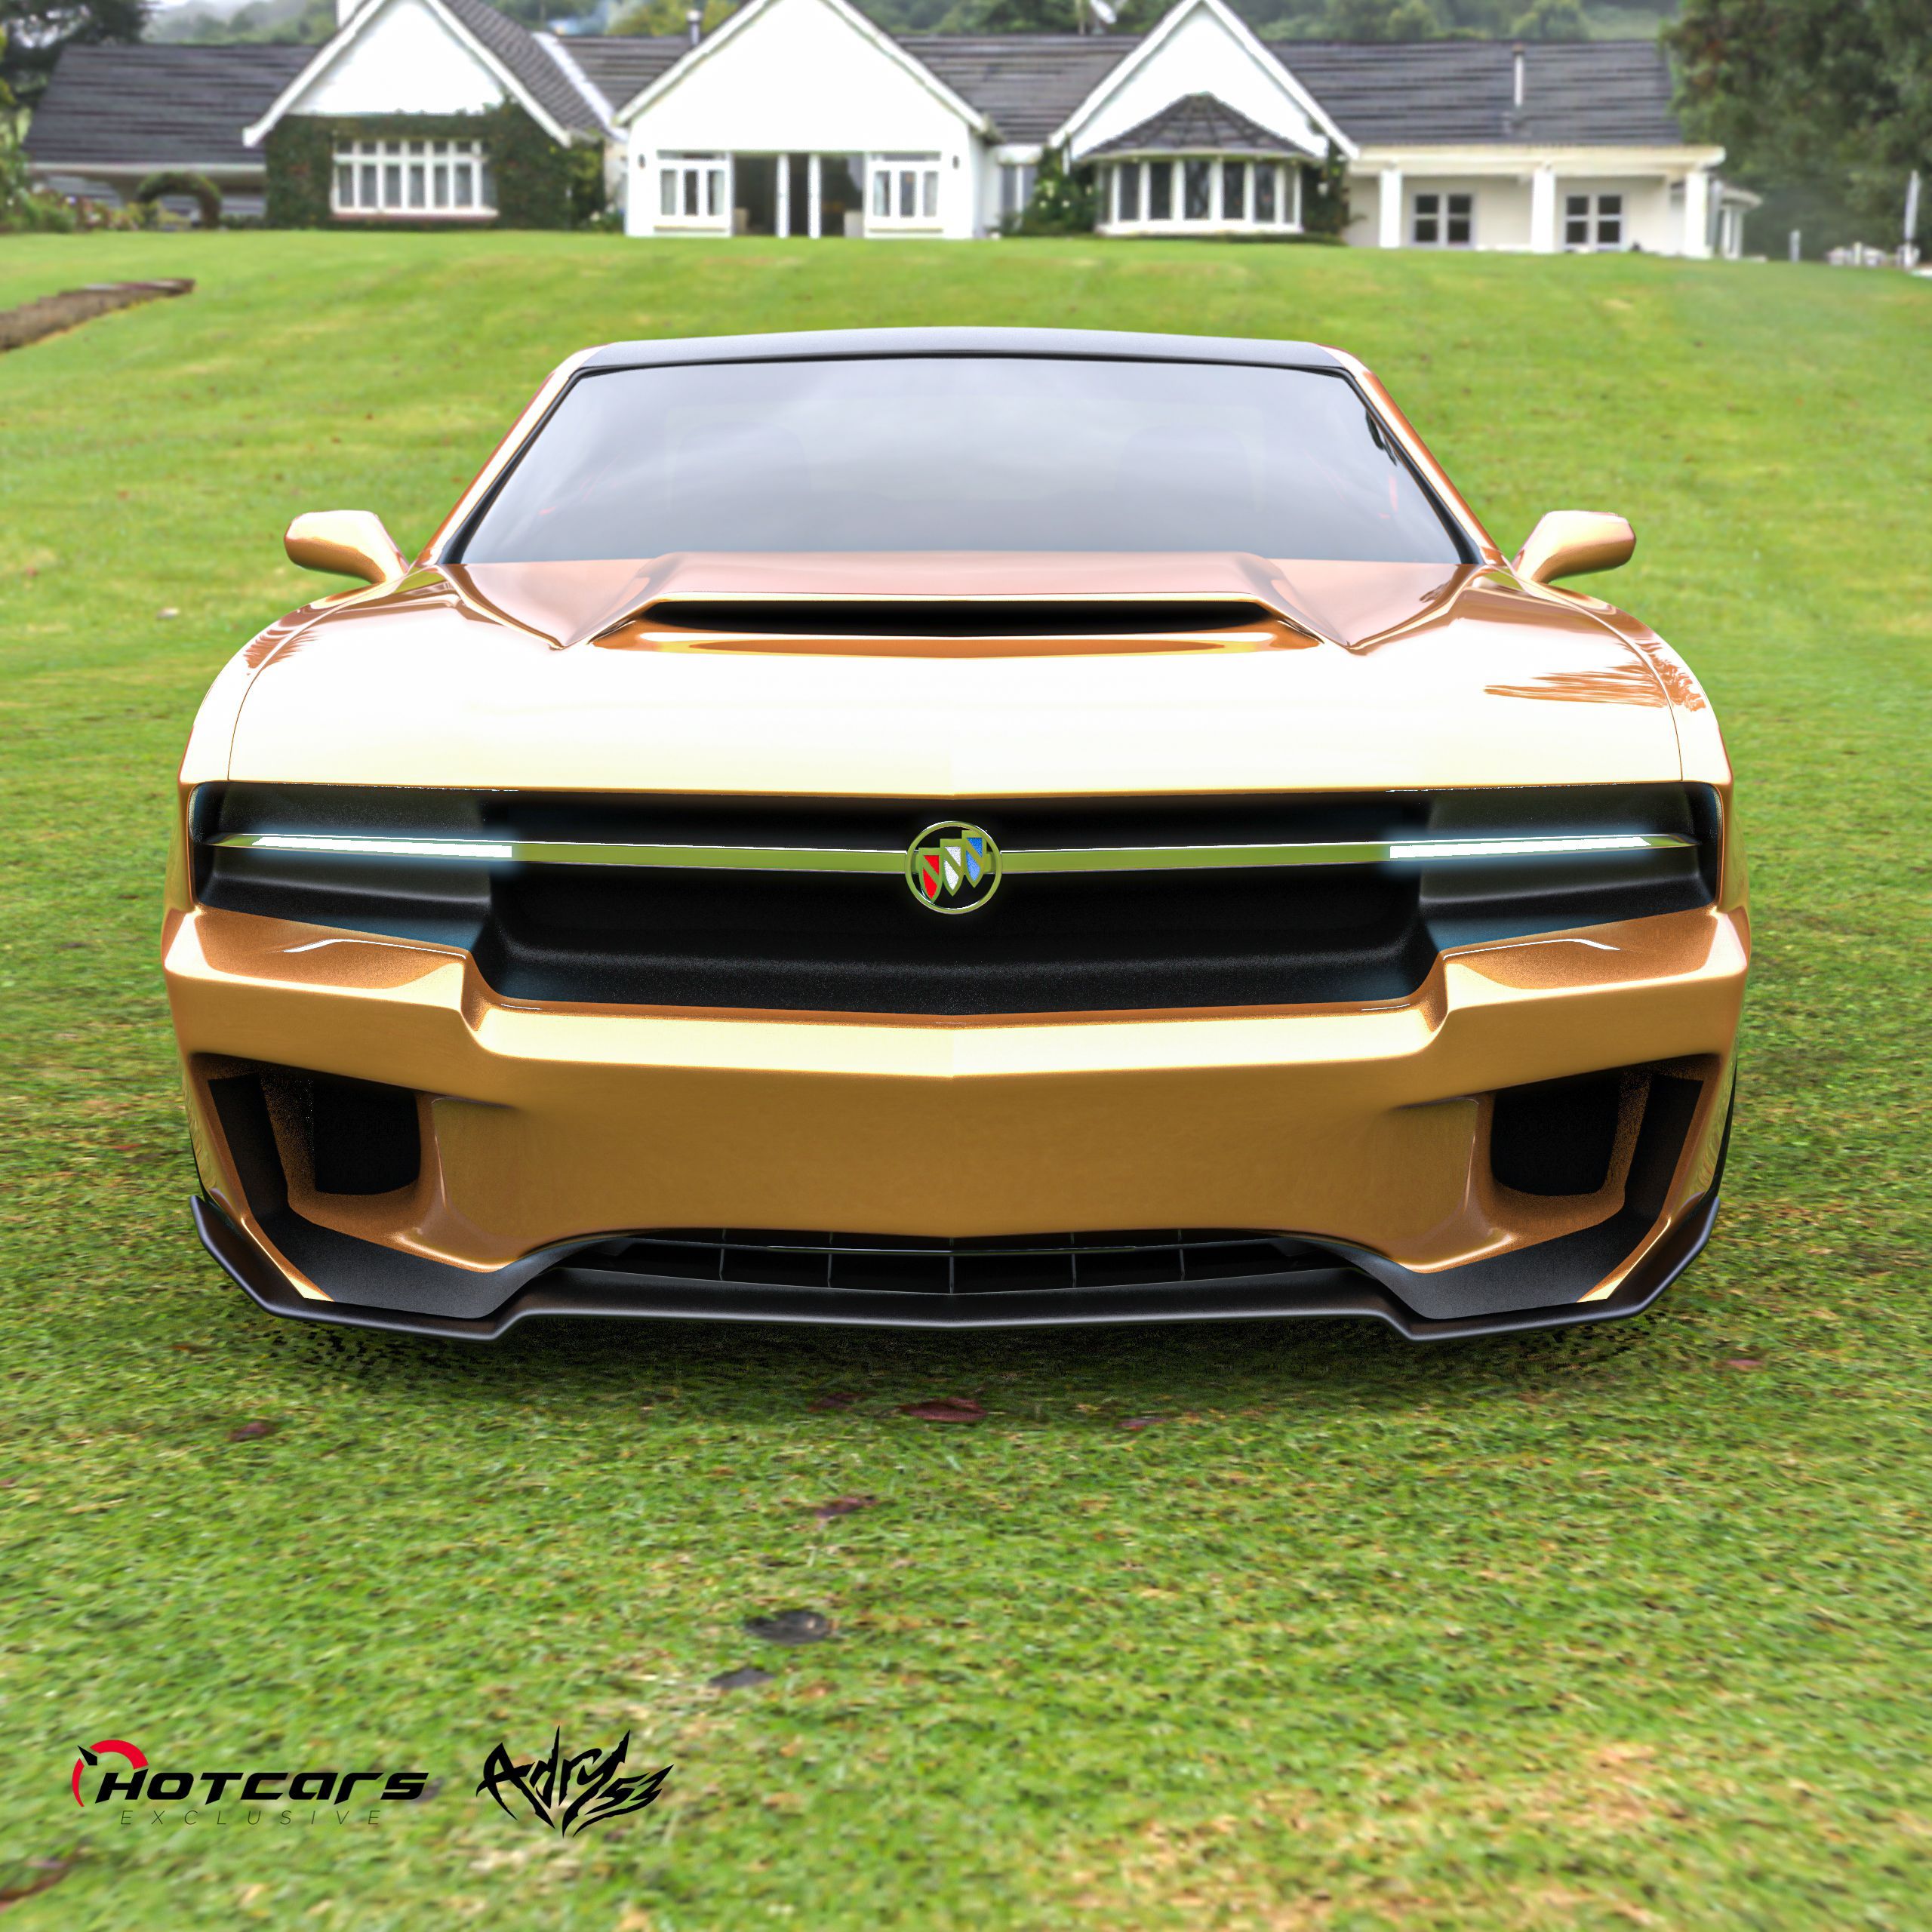 Buick Skylark render, front profile view